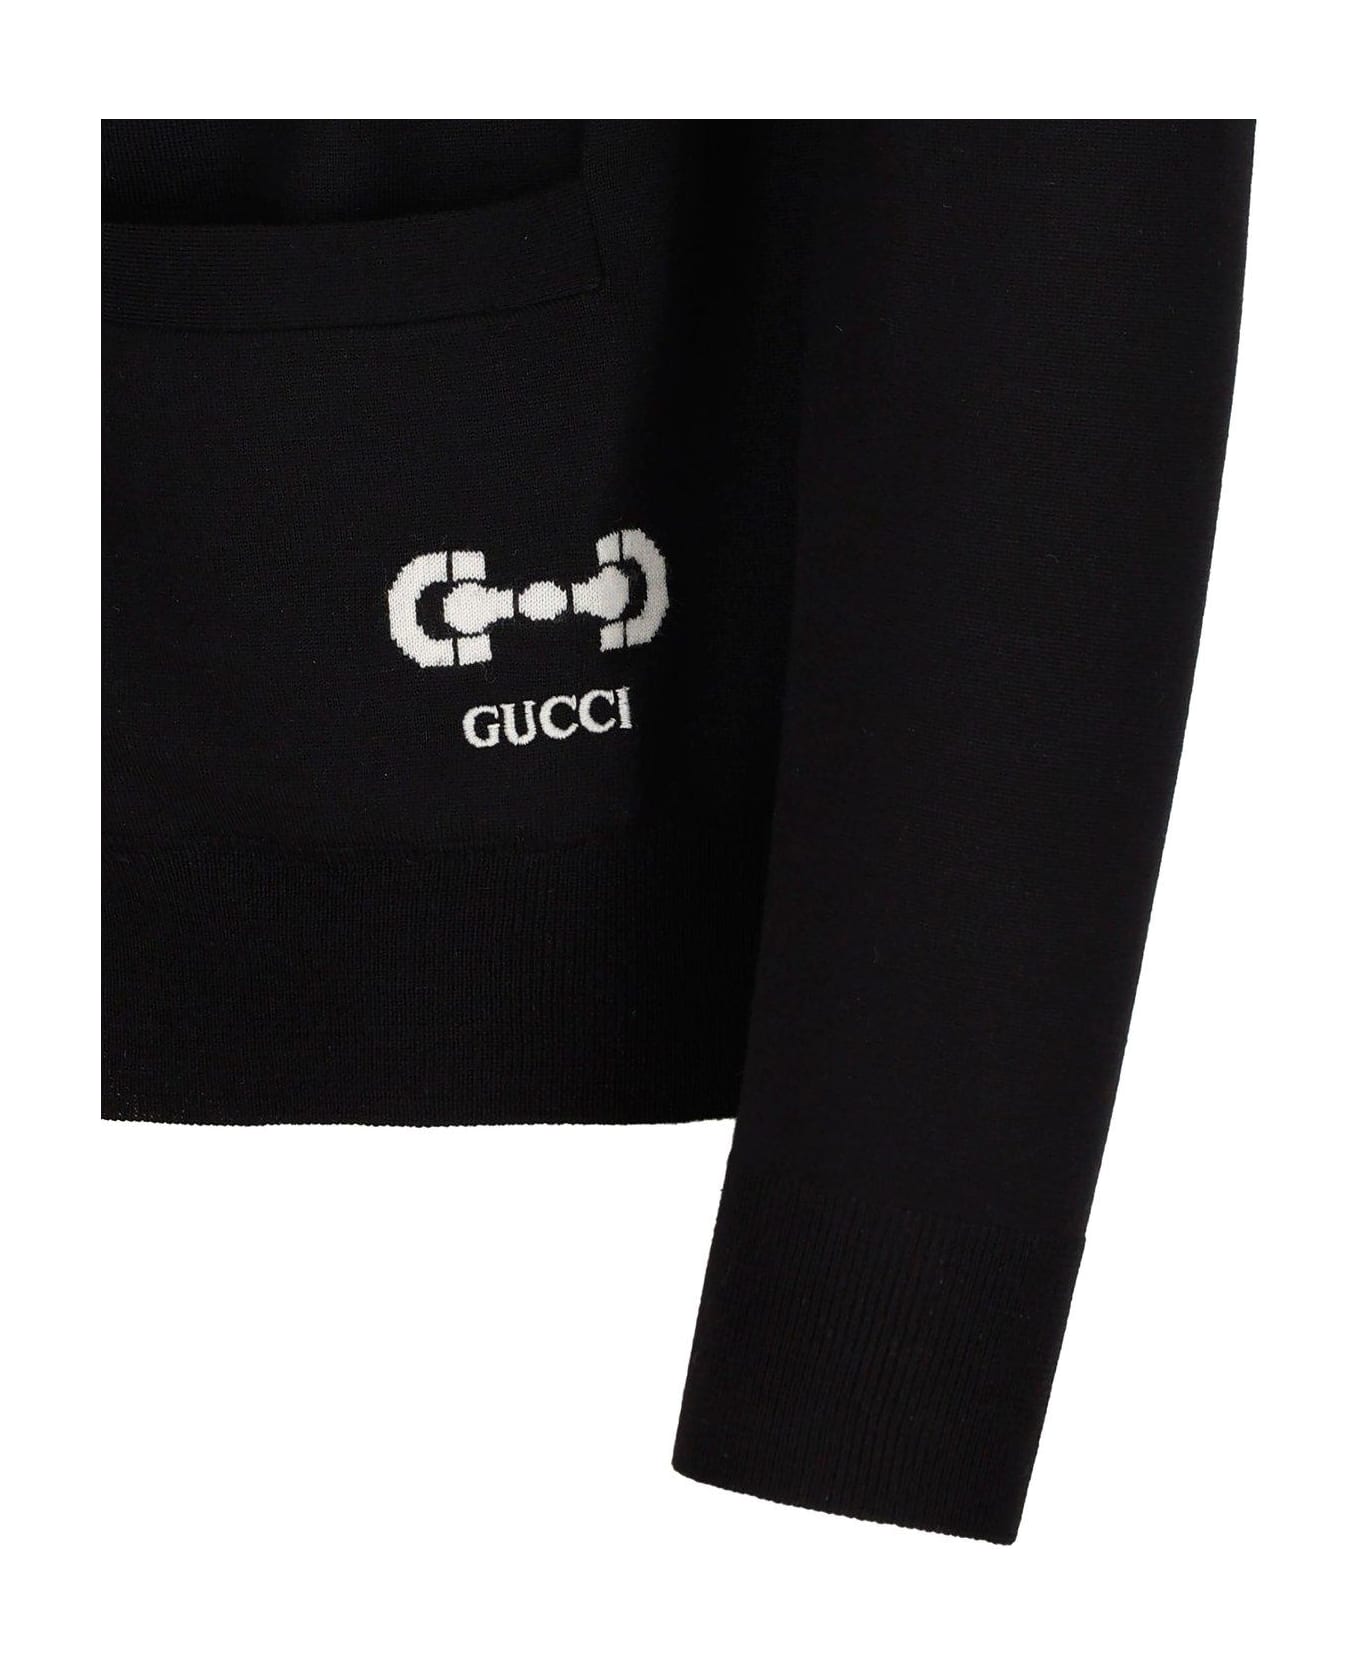 Gucci Gg Intarsia Knit Cardigan